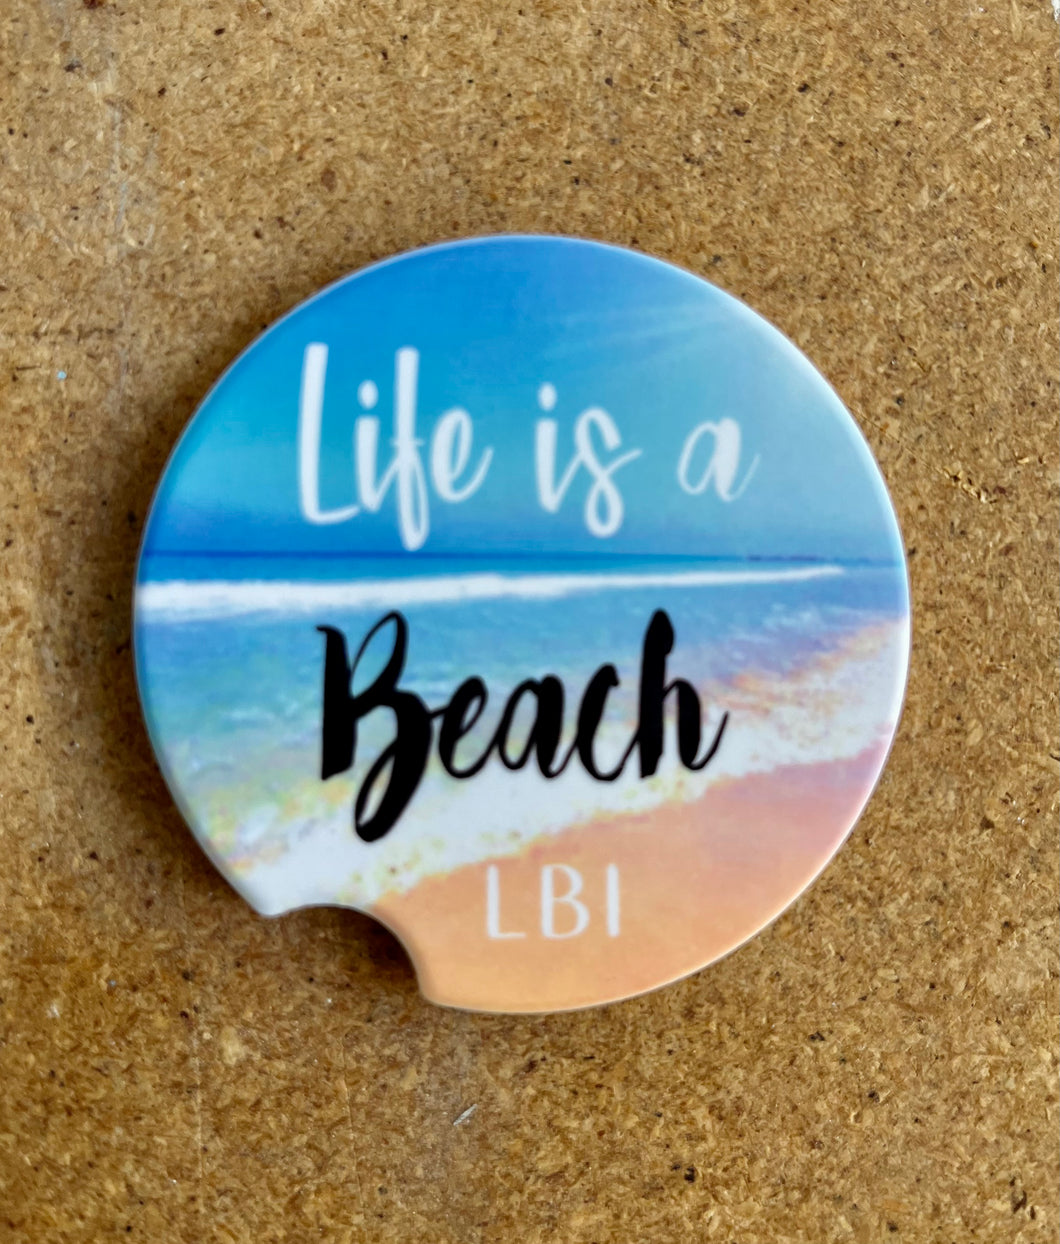 Life is a Beach car coaster